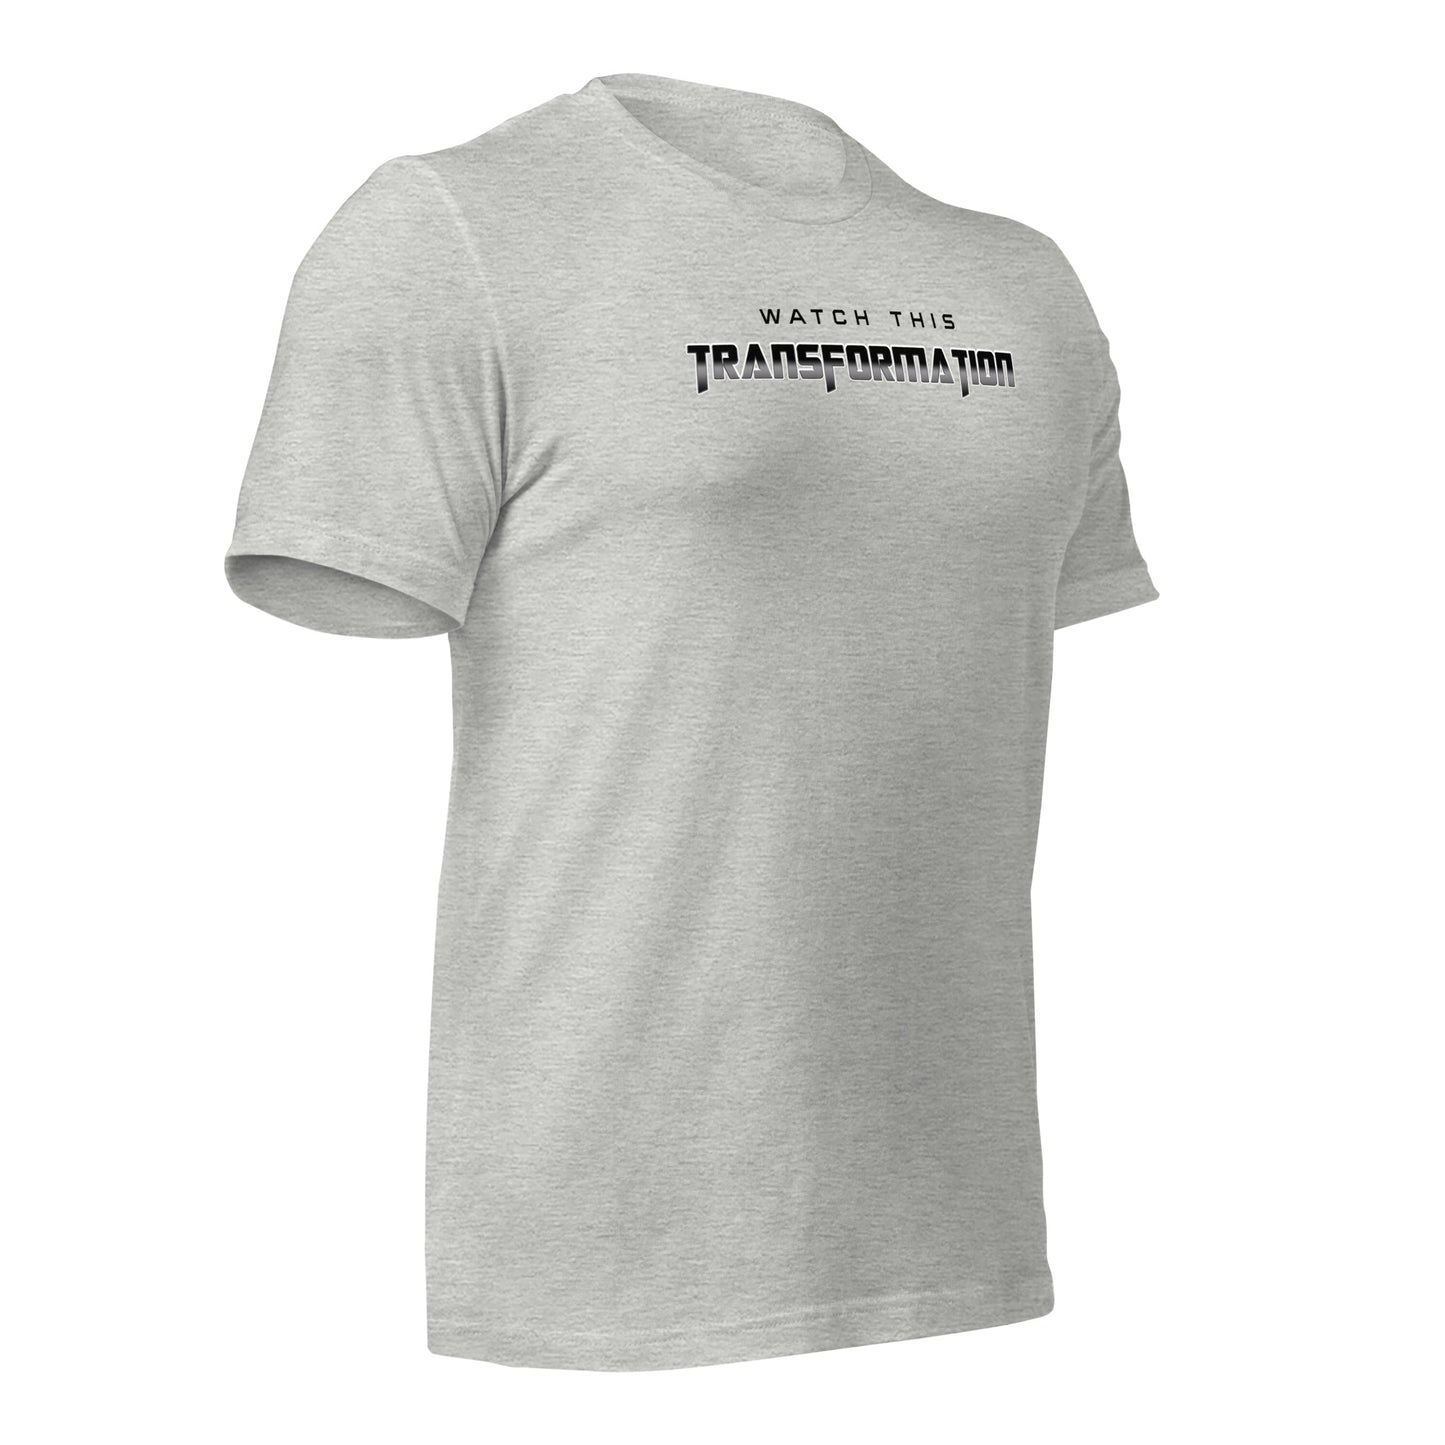 "Transformation" Unisex t-shirt